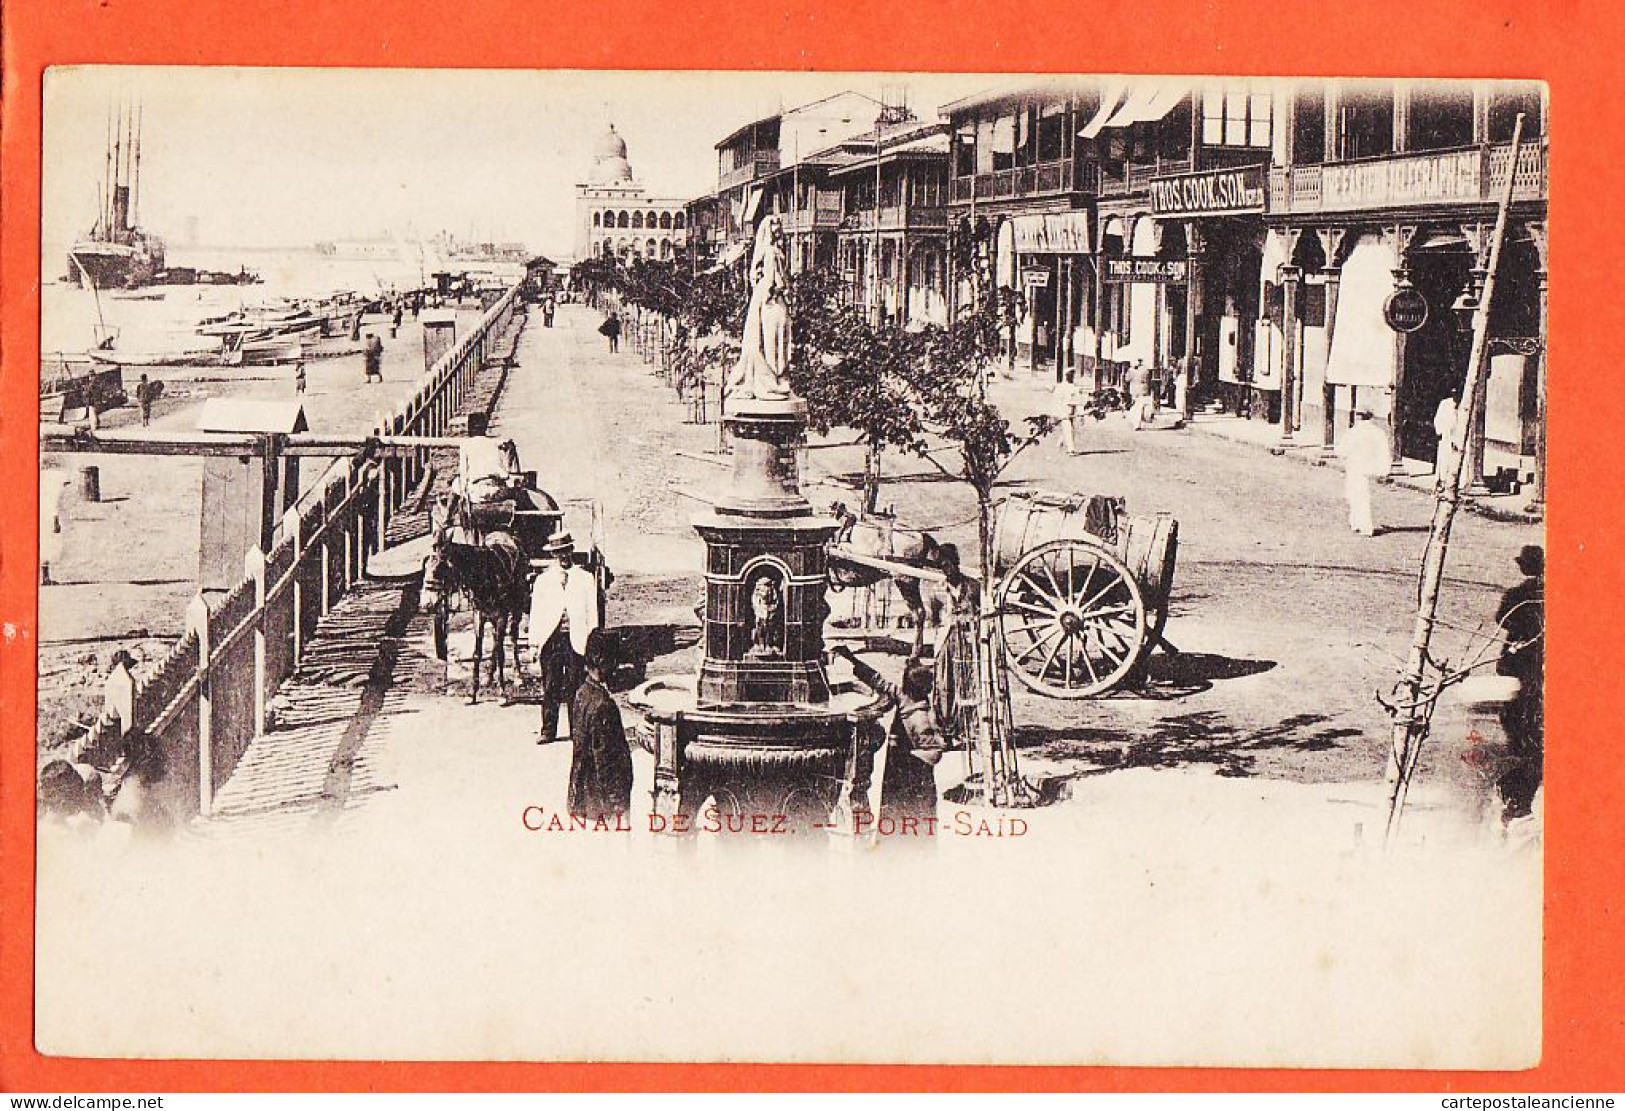 33869 / ⭐ Canal SUEZ PORT-SAID Egypte Citerne Fontaine Reine VICTORIA Quai Eastern Telegraph-THOS COOK & SON 1900s Egypt - Port Said